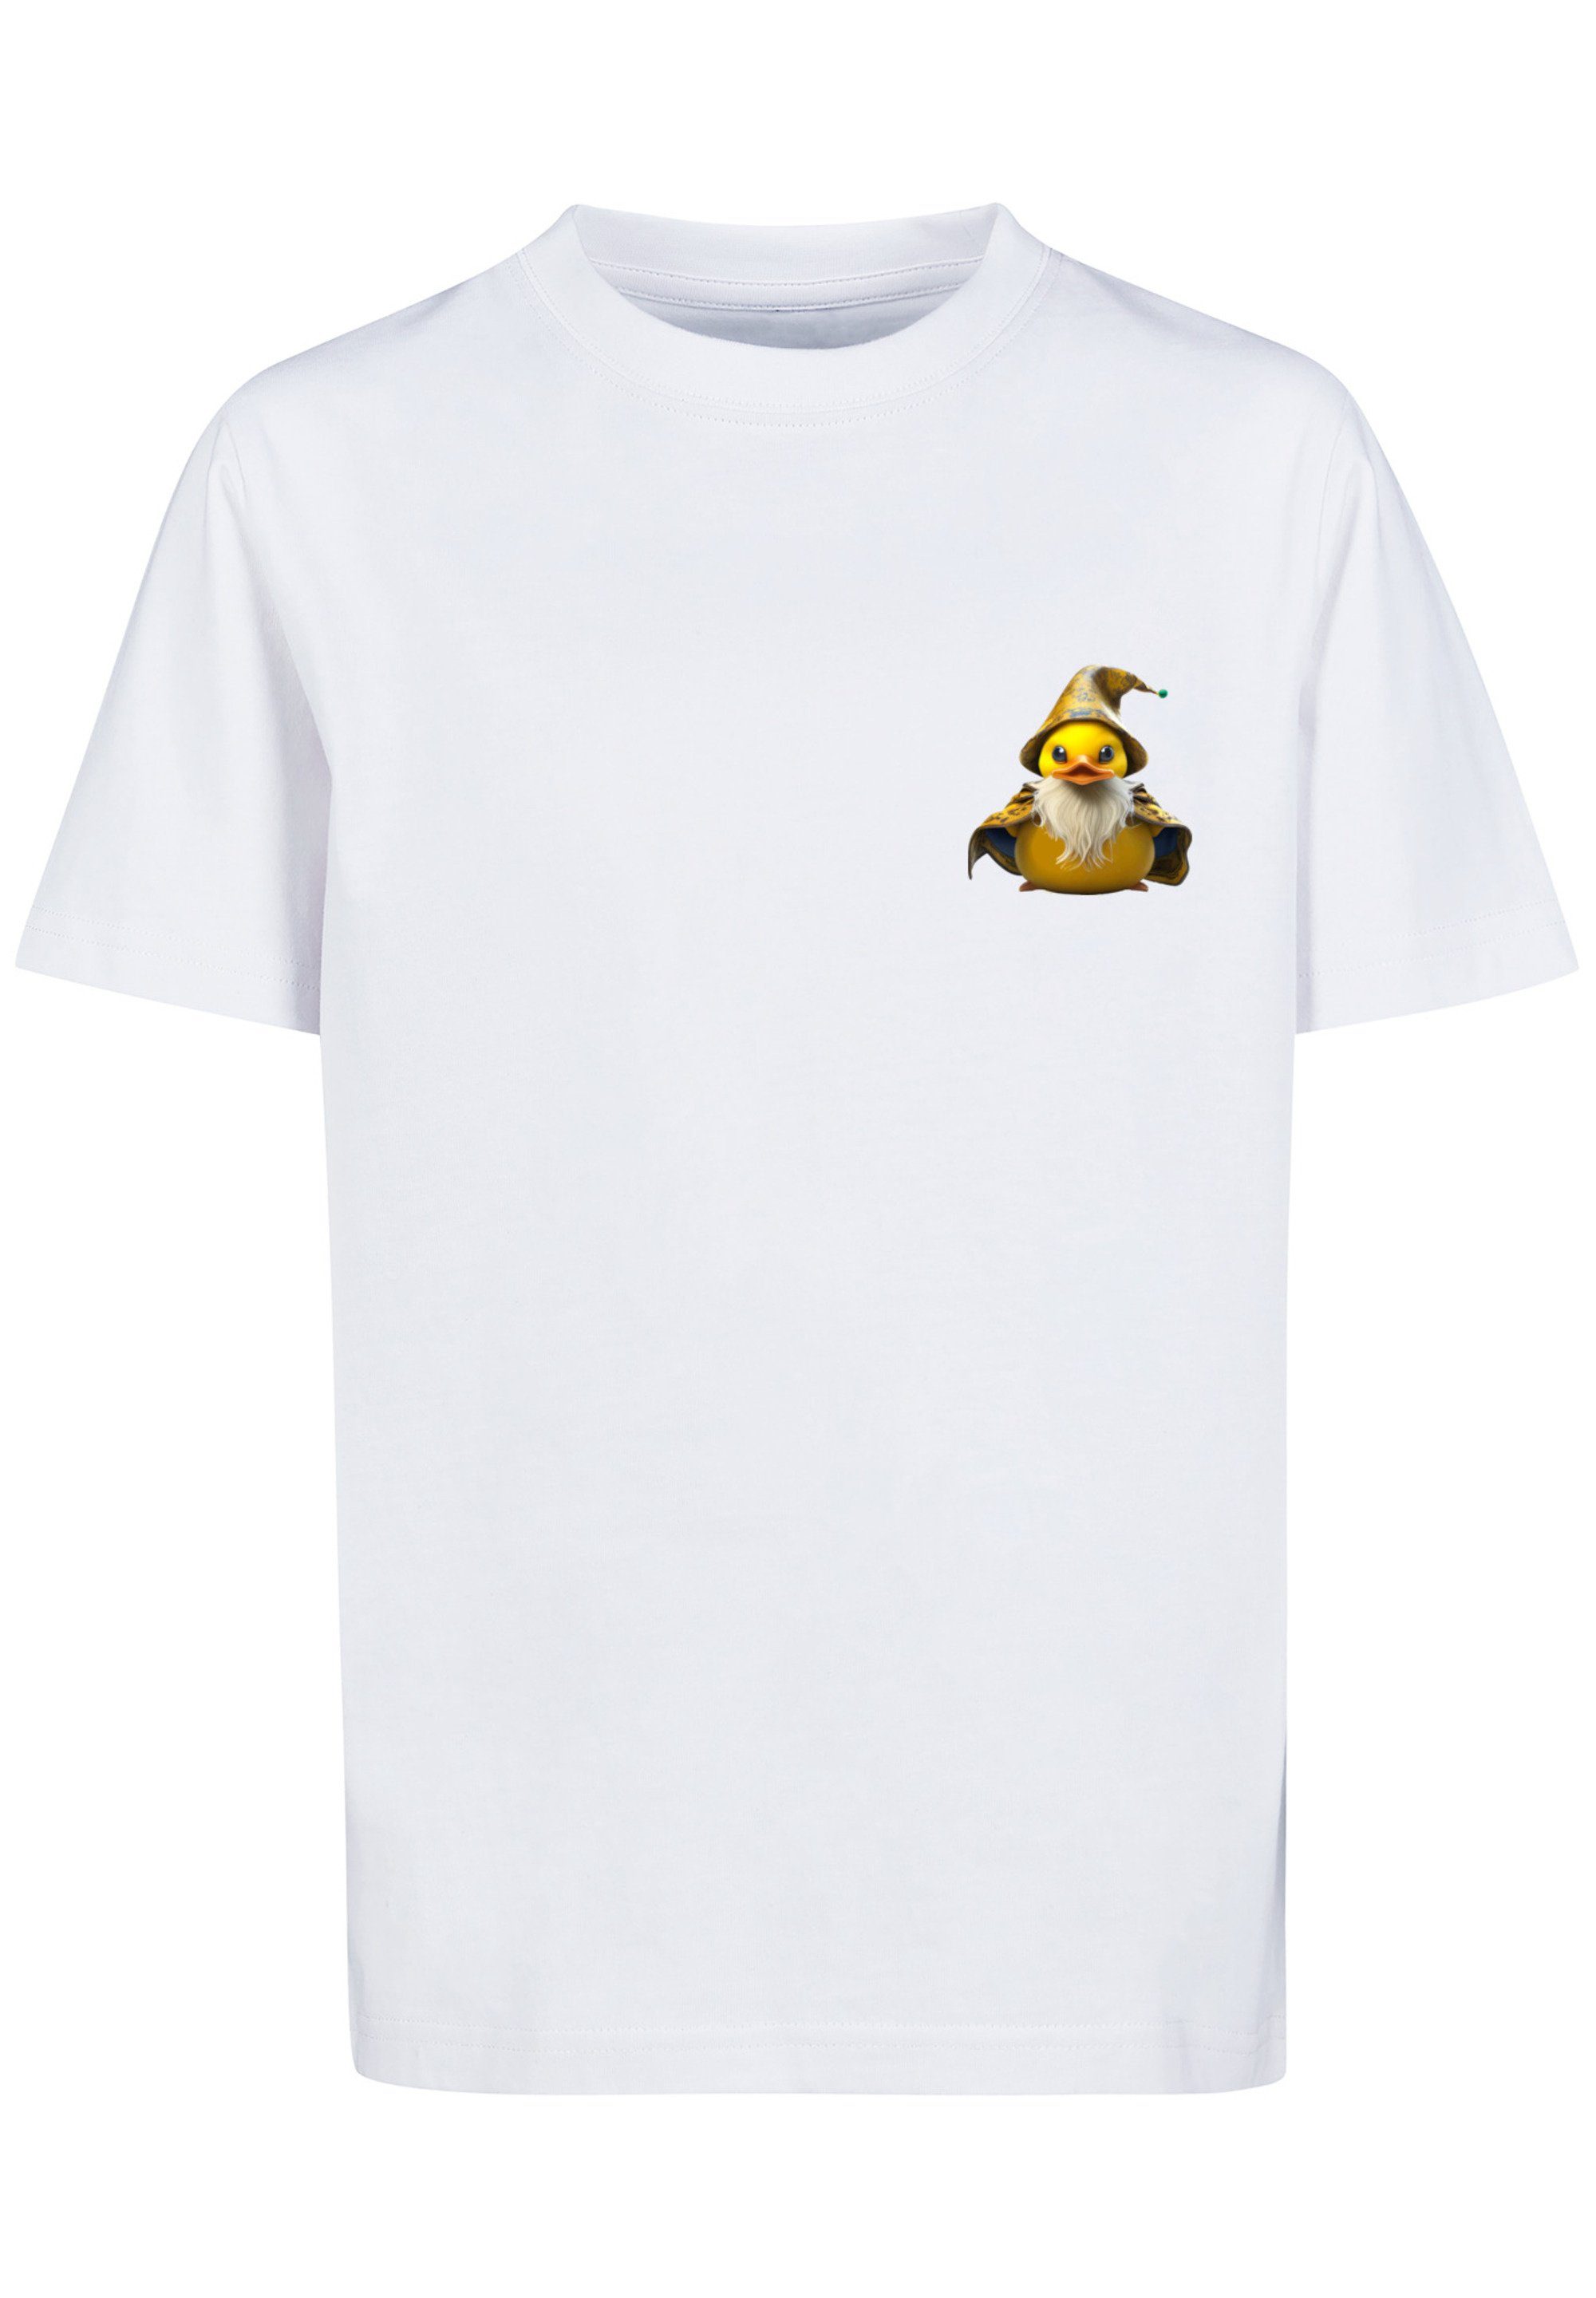 F4NT4STIC T-Shirt Rubber weiß TEE Duck Wizard Print UNISEX